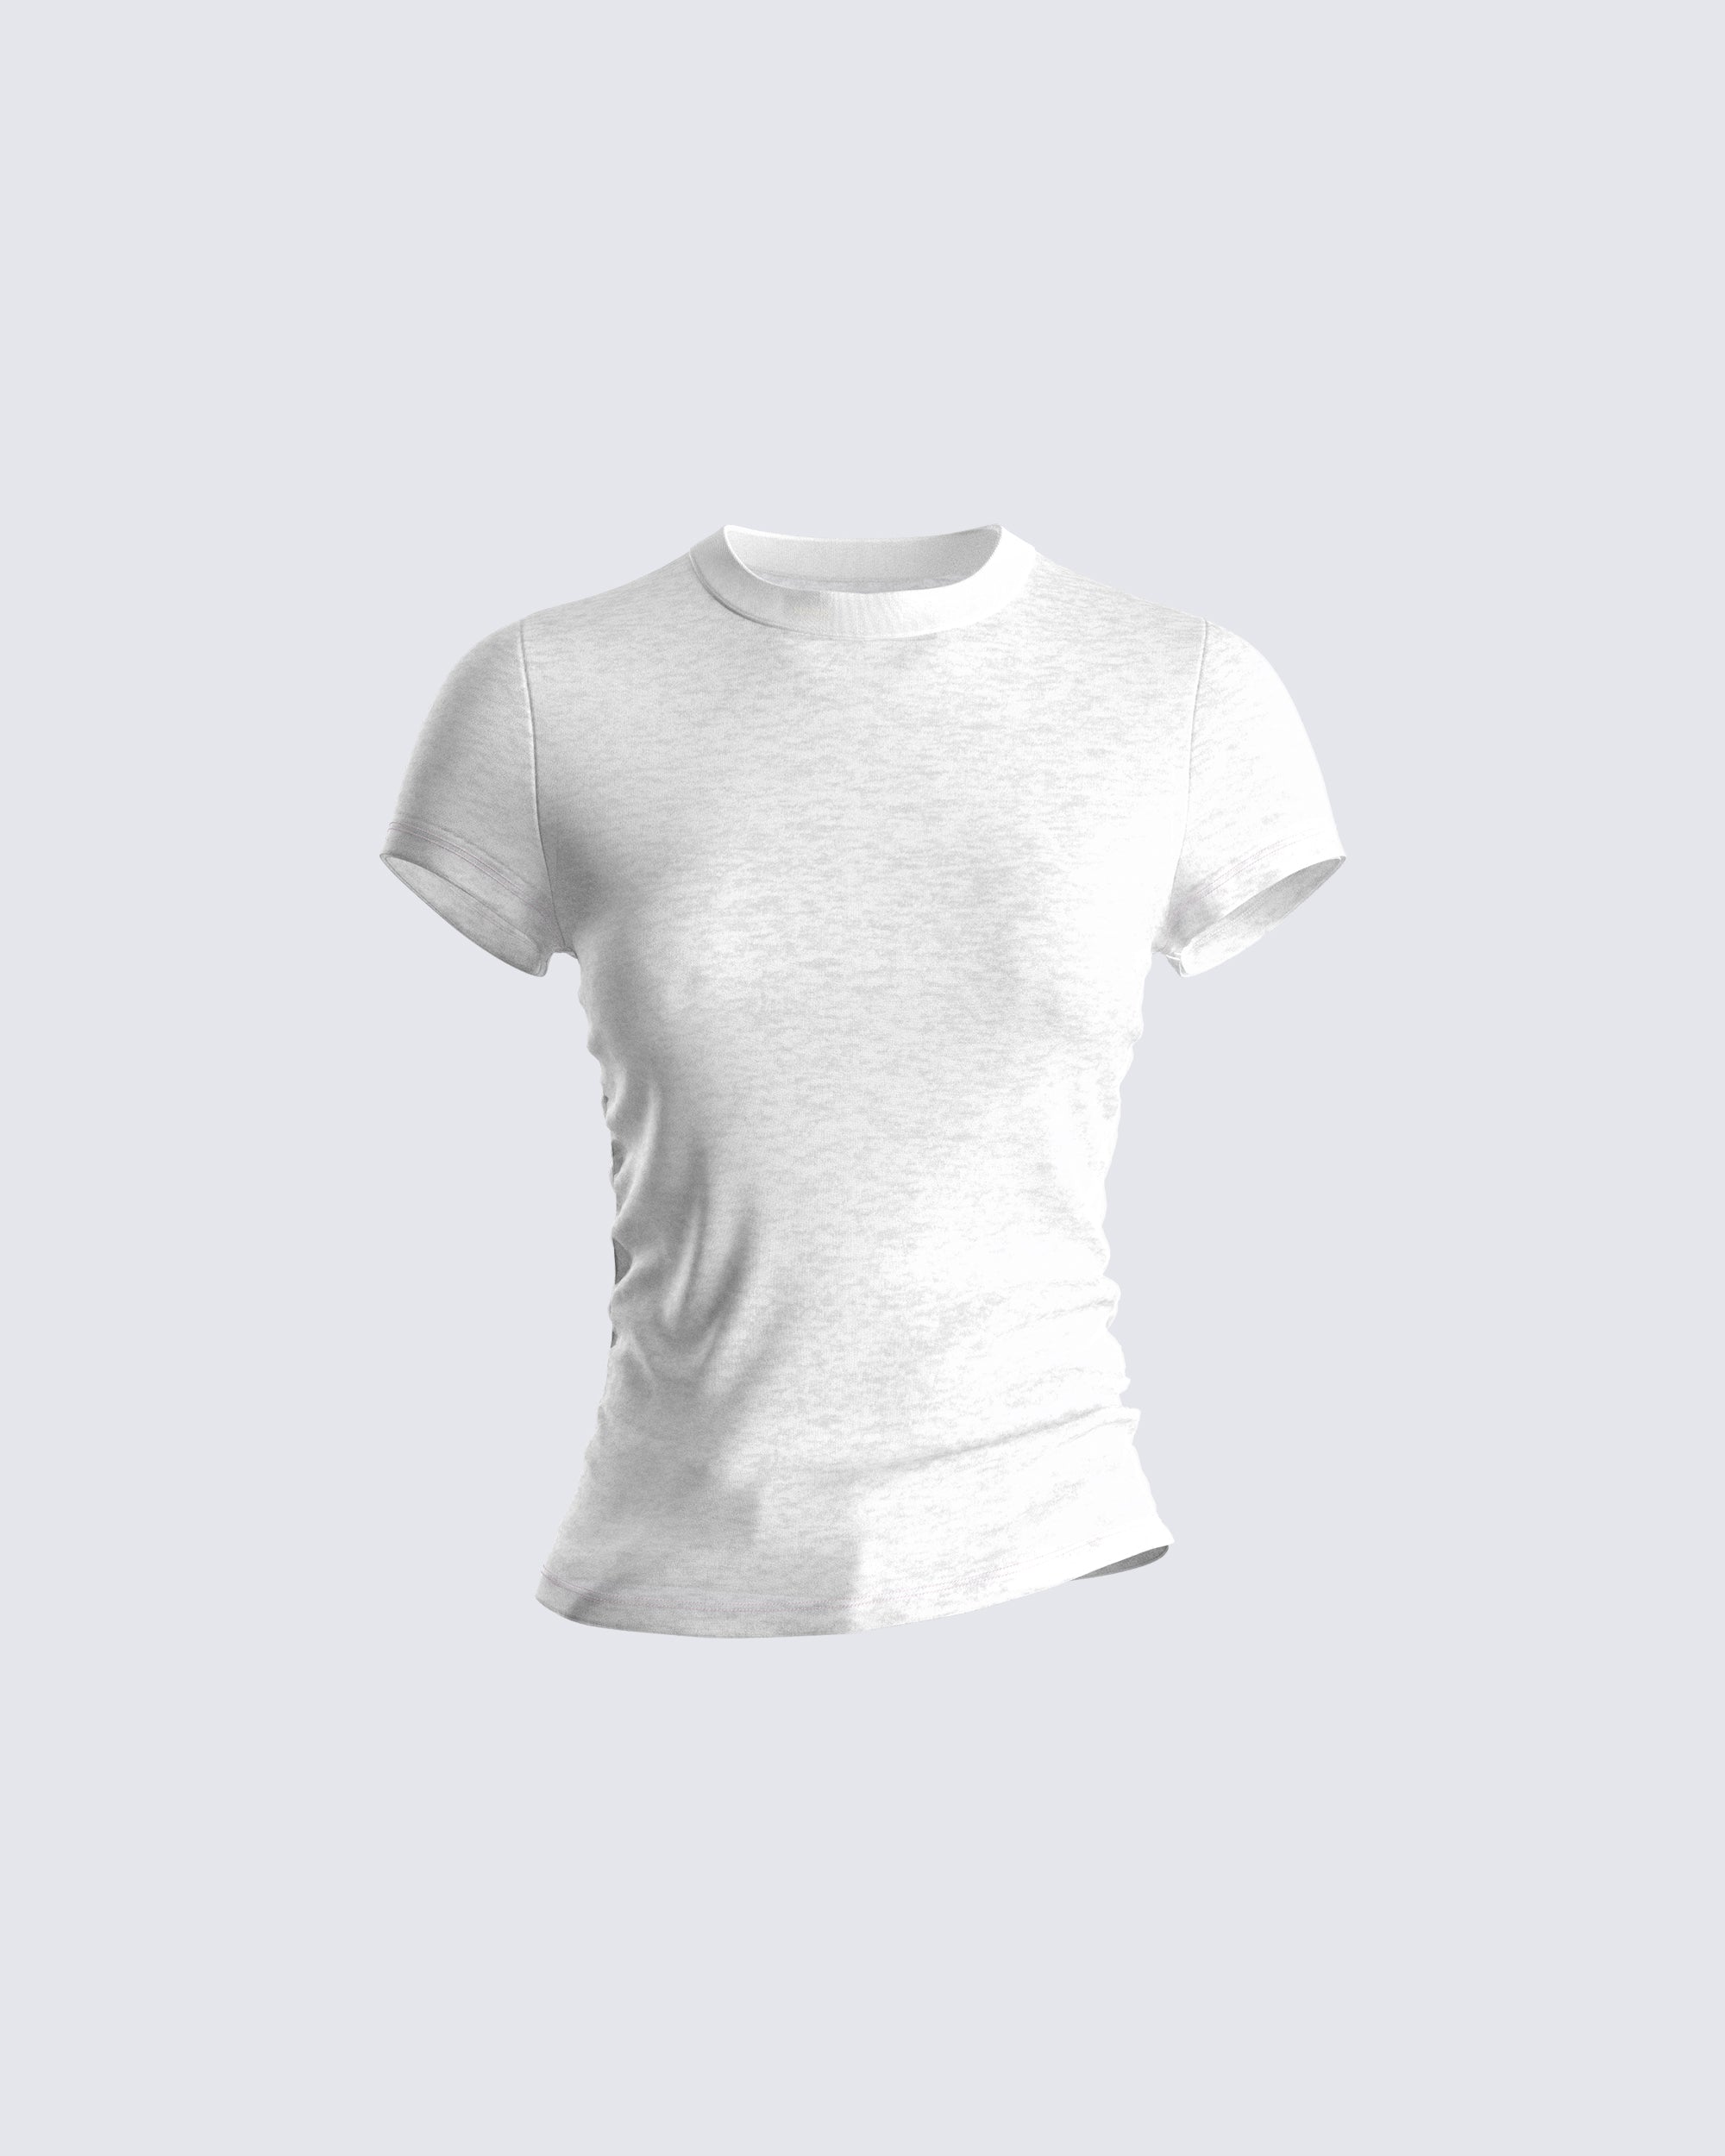 FINESSE White Top T Shirt – Asher Slub Knit